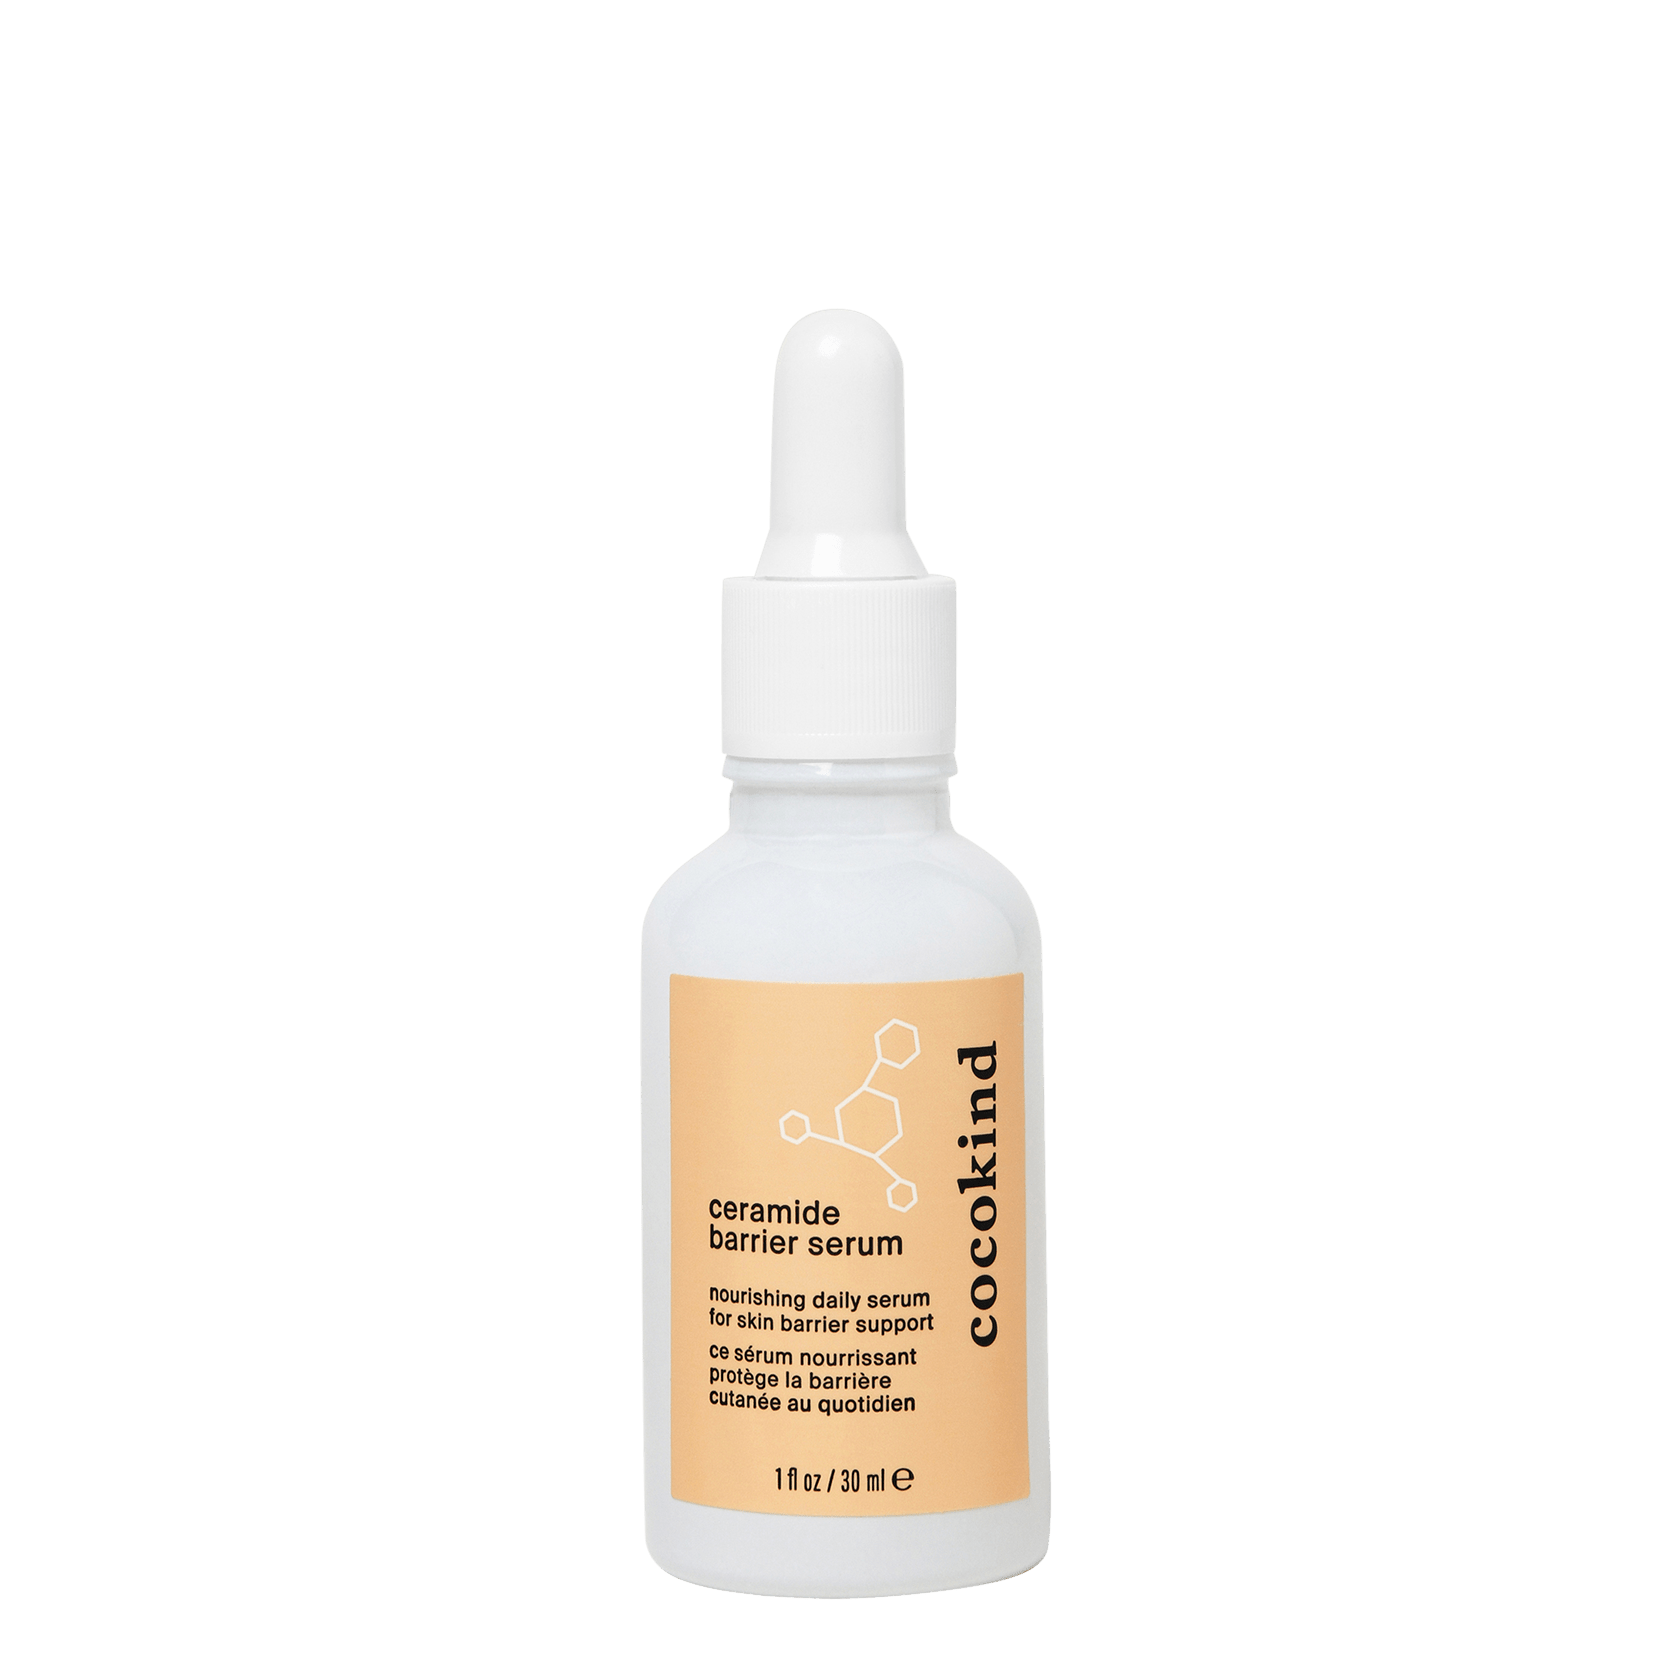 beginner retinol gel 0.1%– cocokind